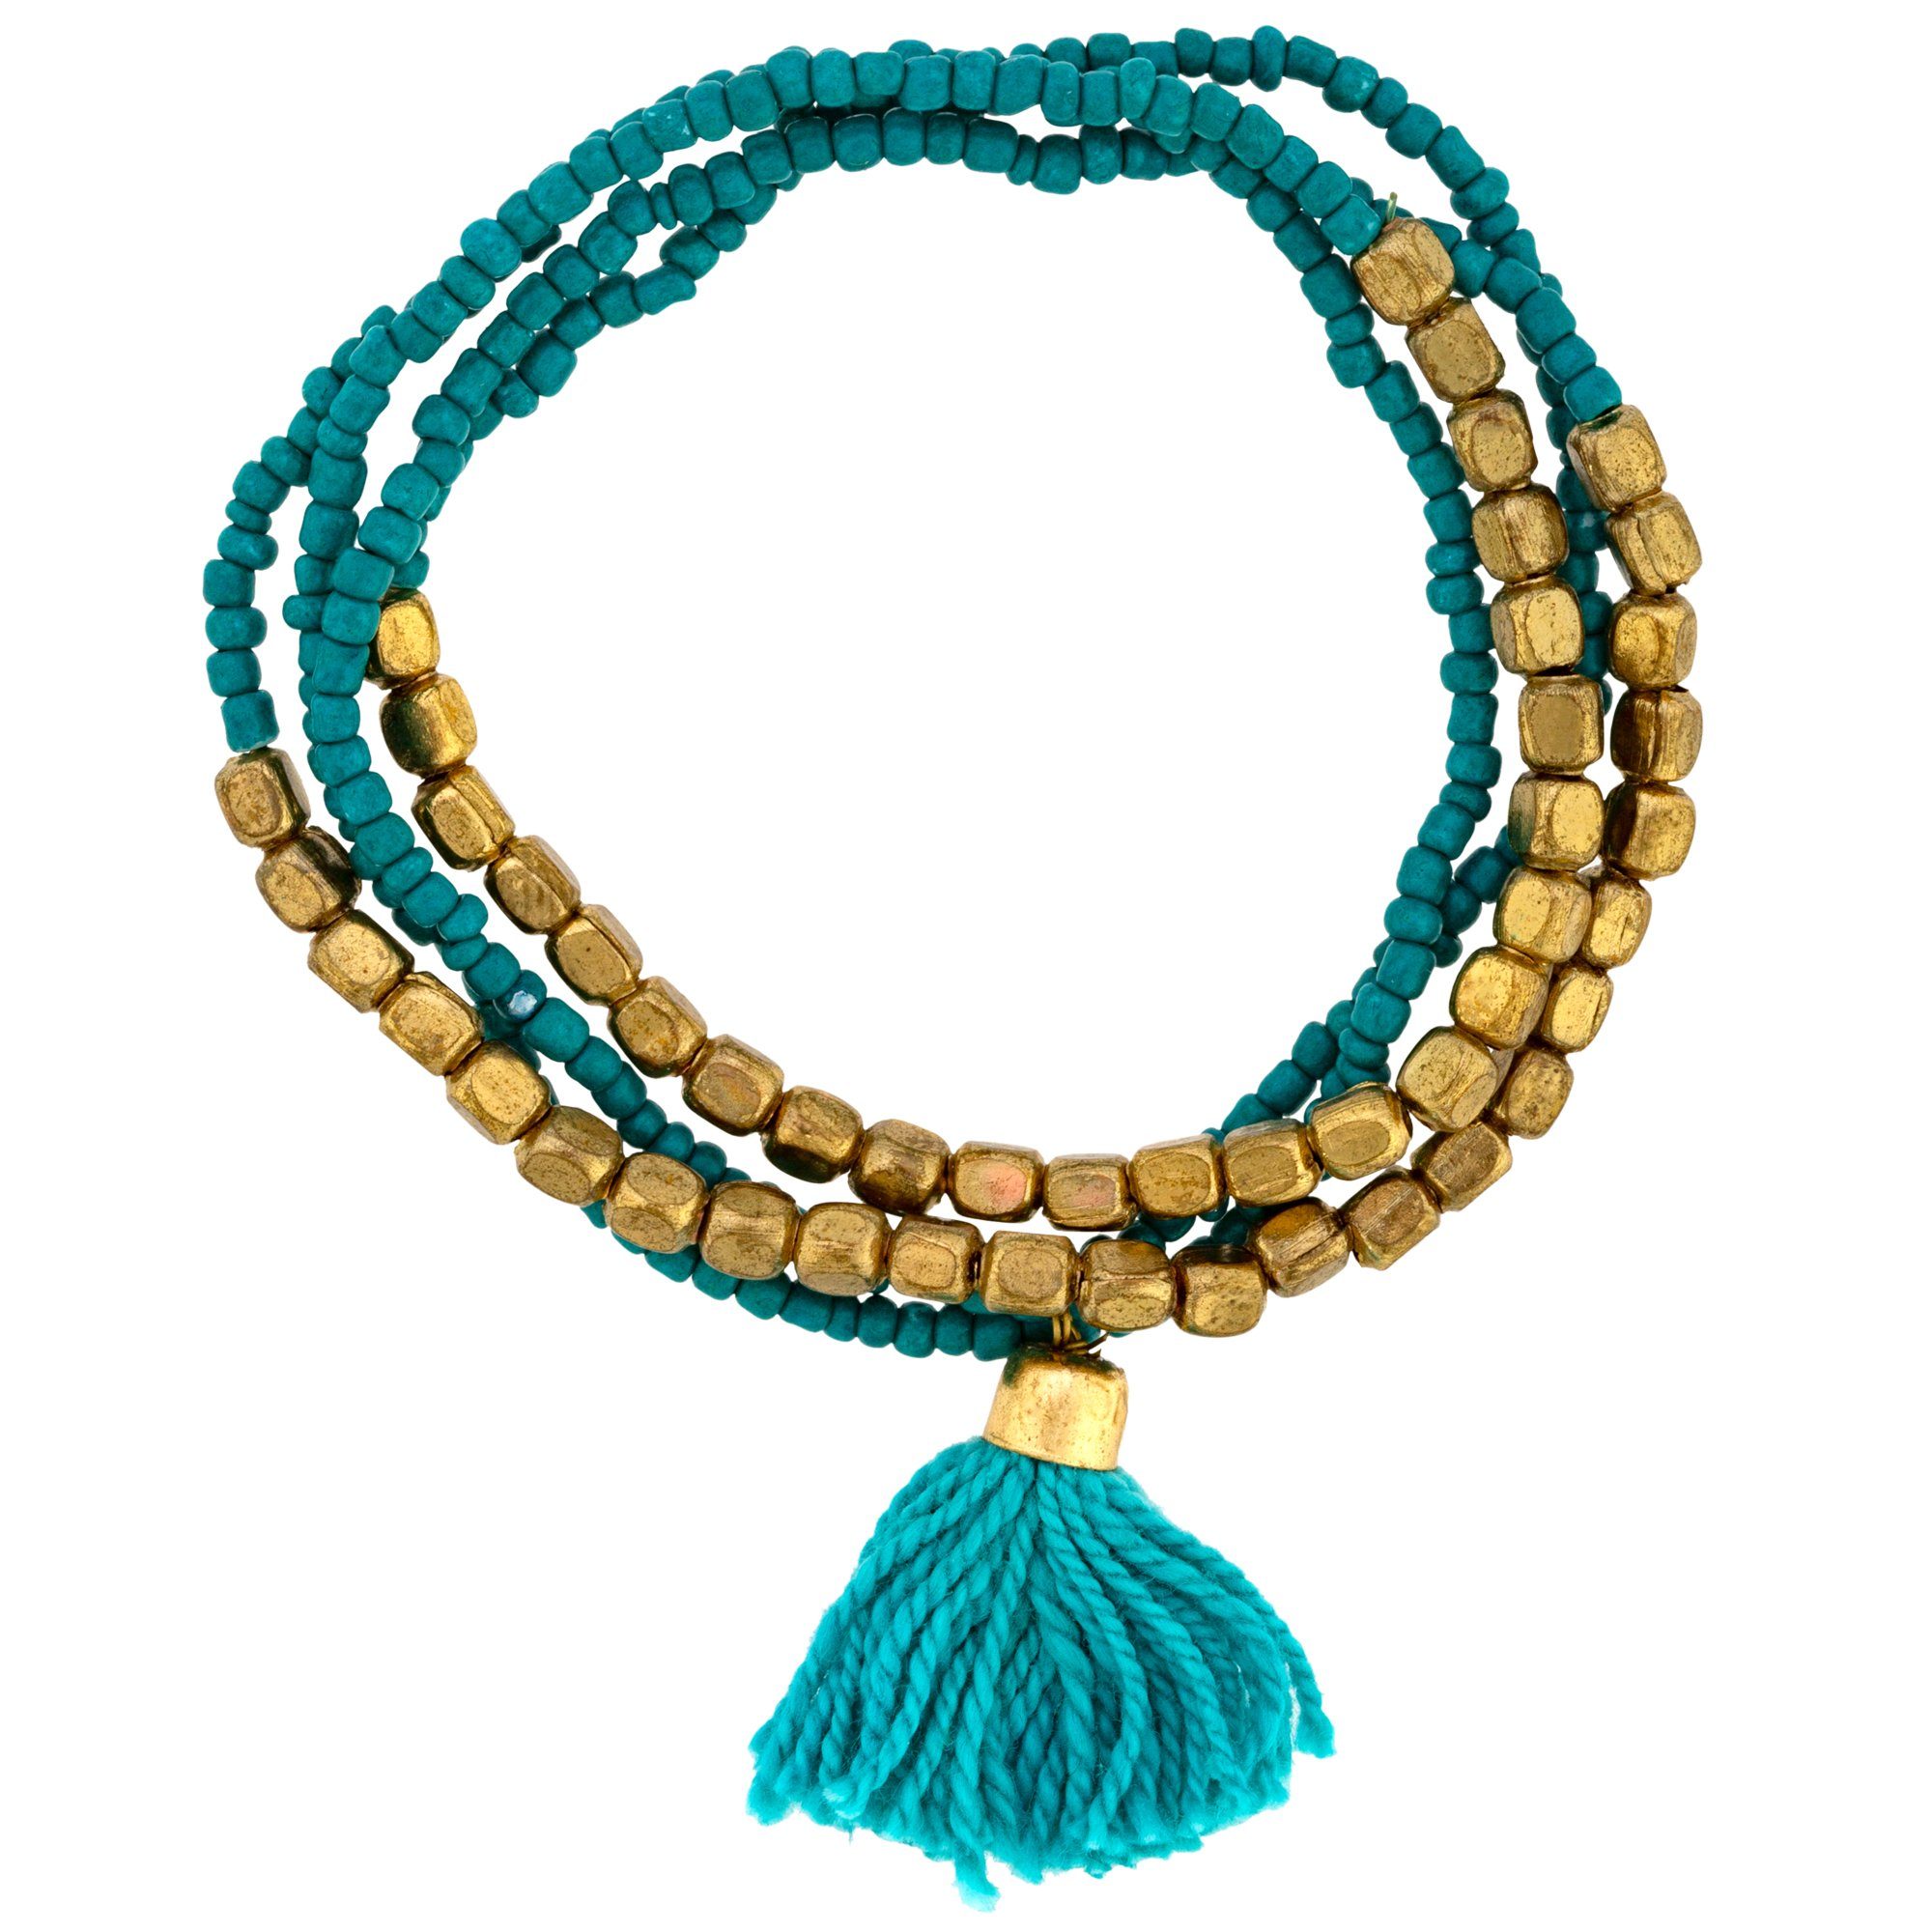 Beaded Indian Tassel Jewelry - Teal